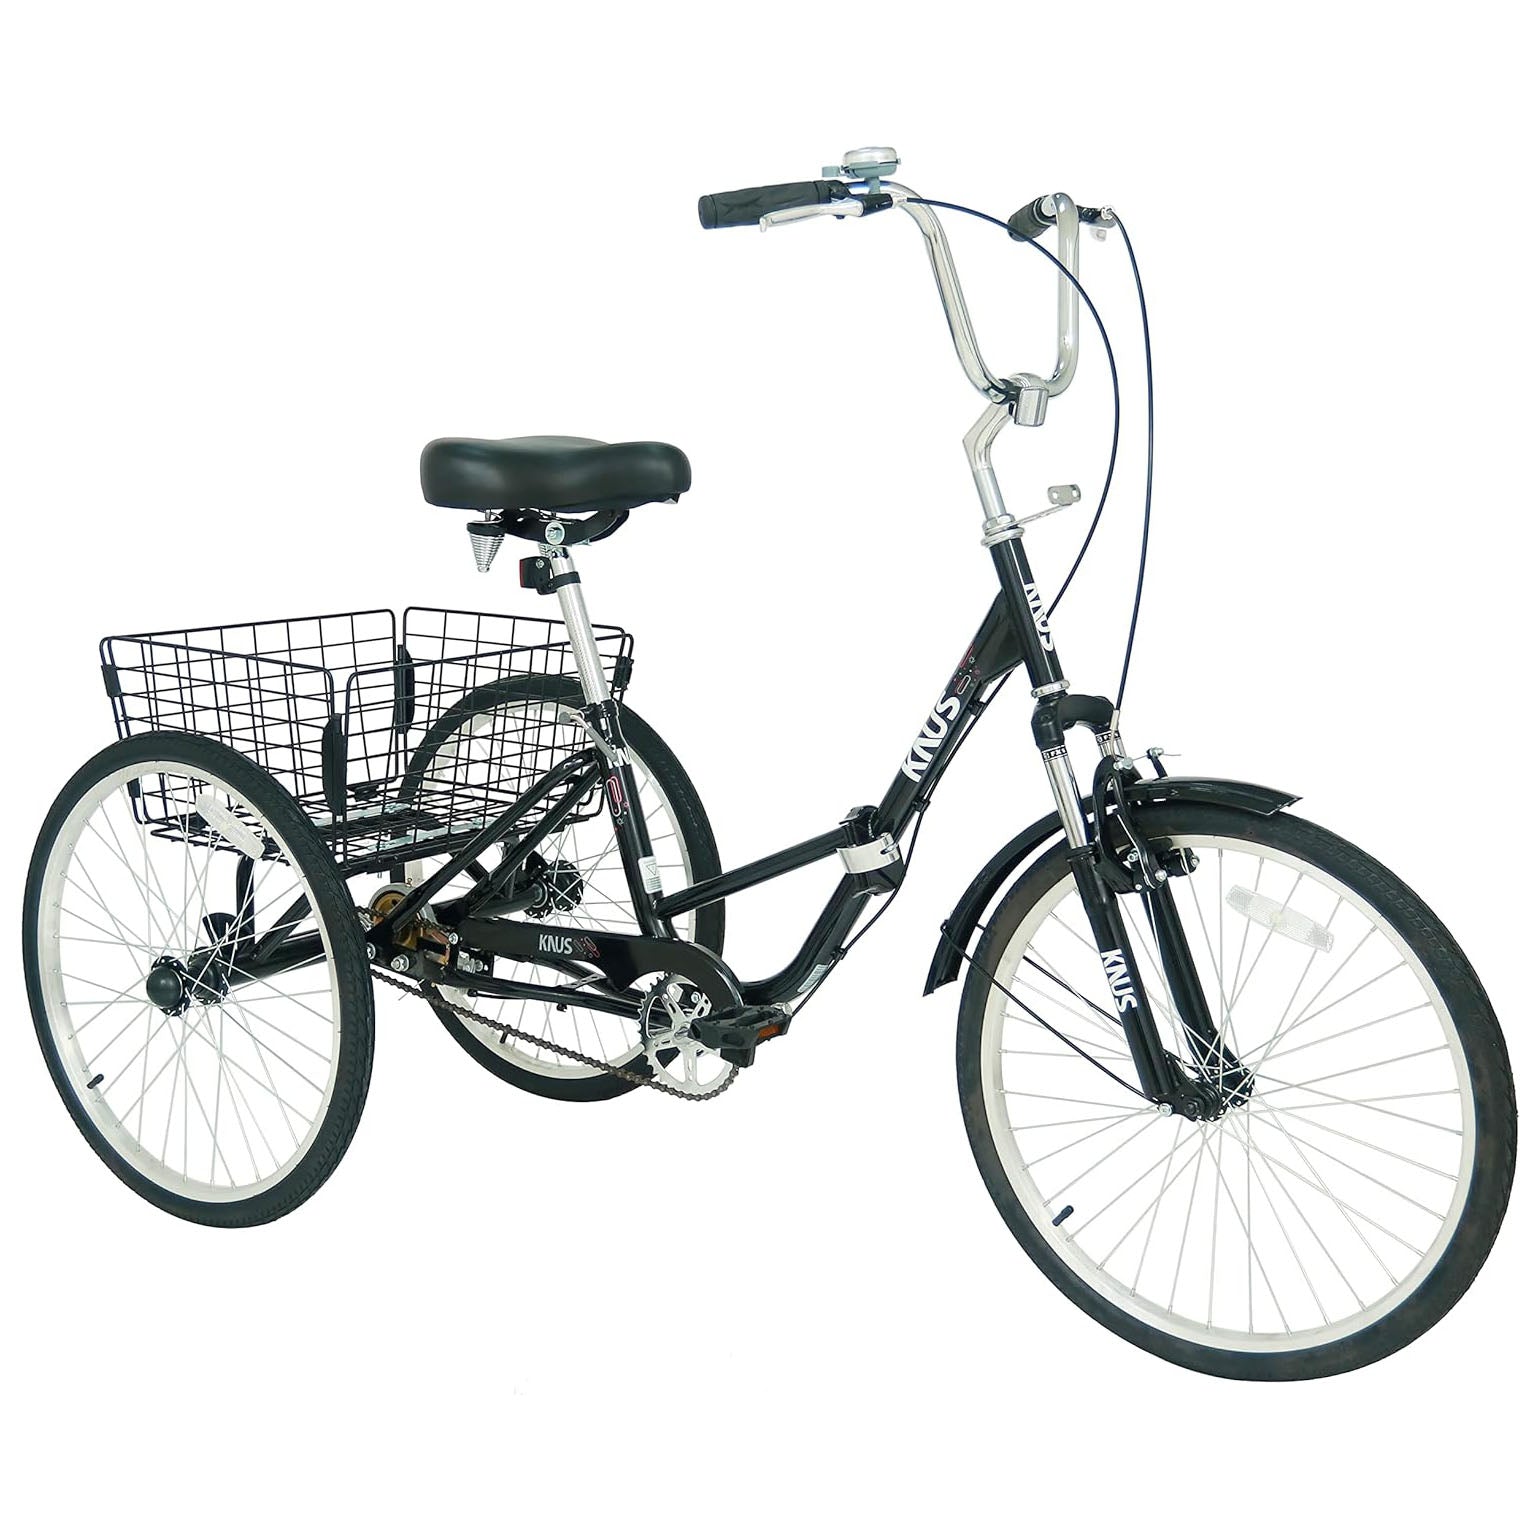 Knus 24" Foldable Single-Speed Tricycle